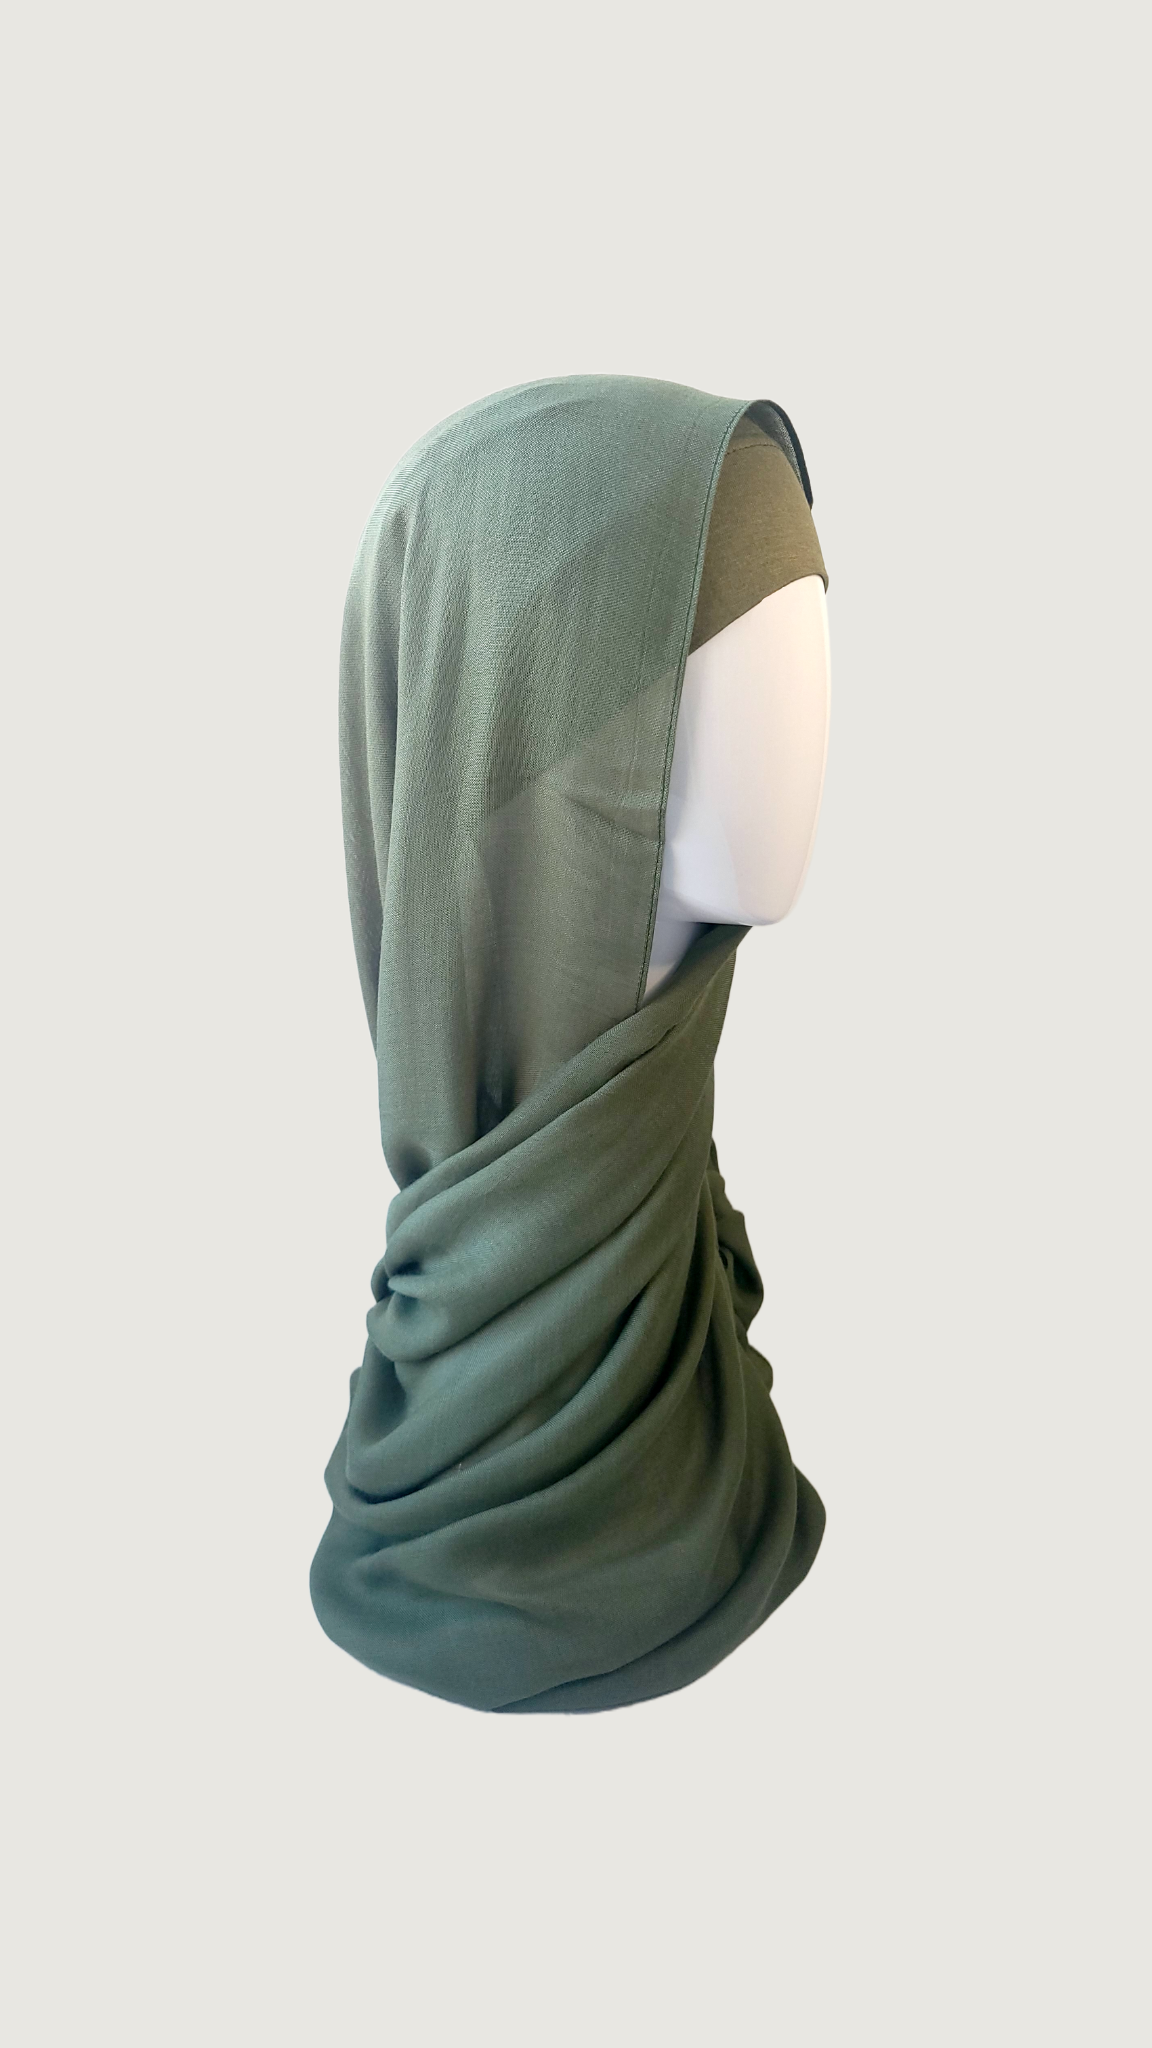 Modal Matching Hijab Set khaki green cotton undercap